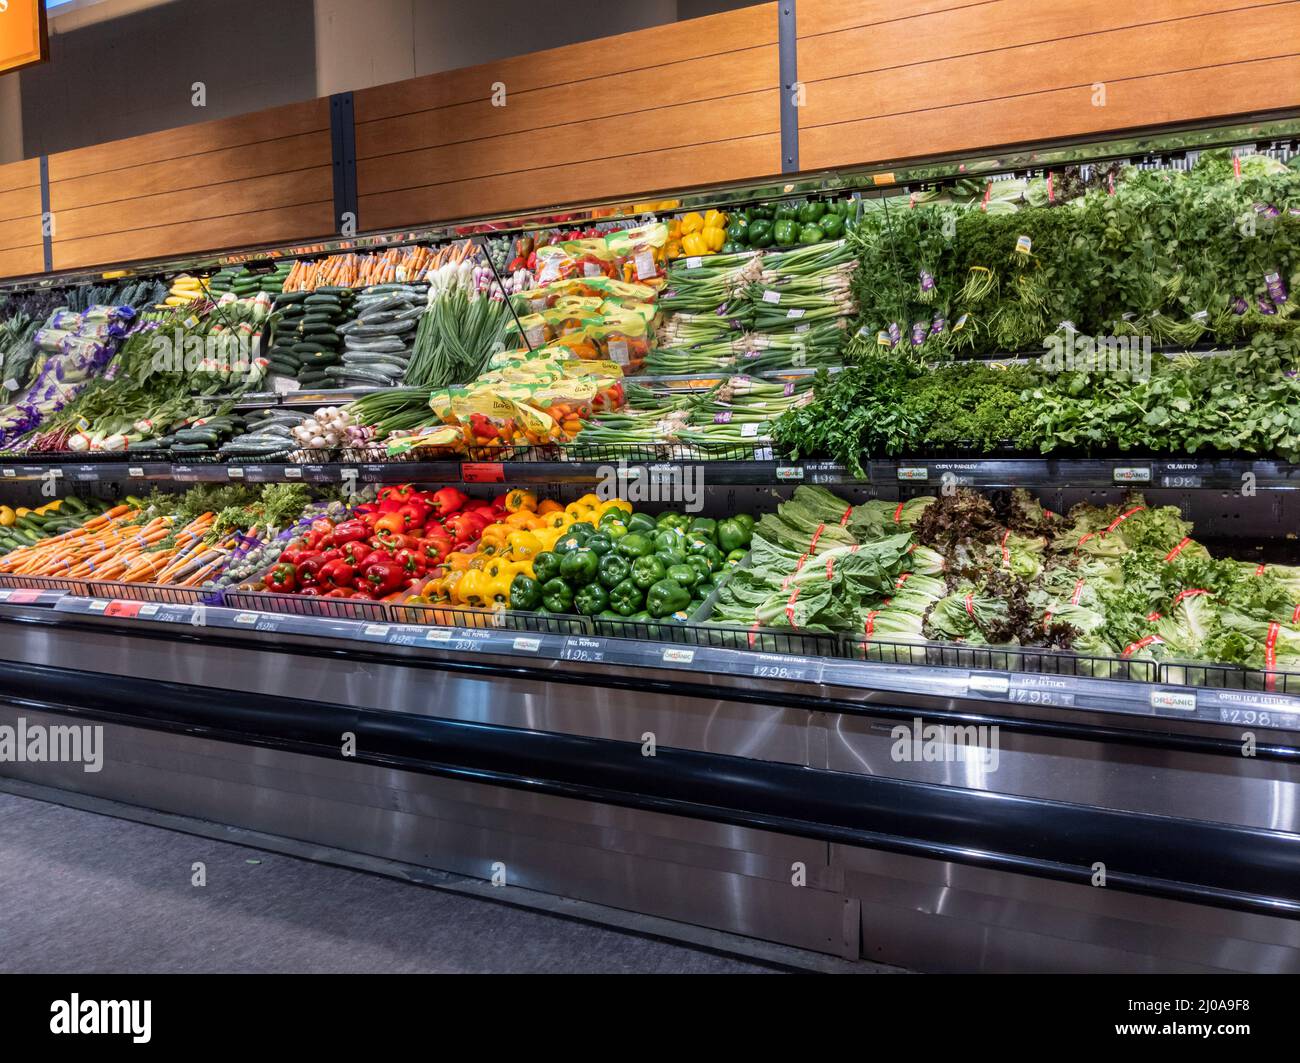 Produce aisle in supermarket stock photo (227297) - YouWorkForThem